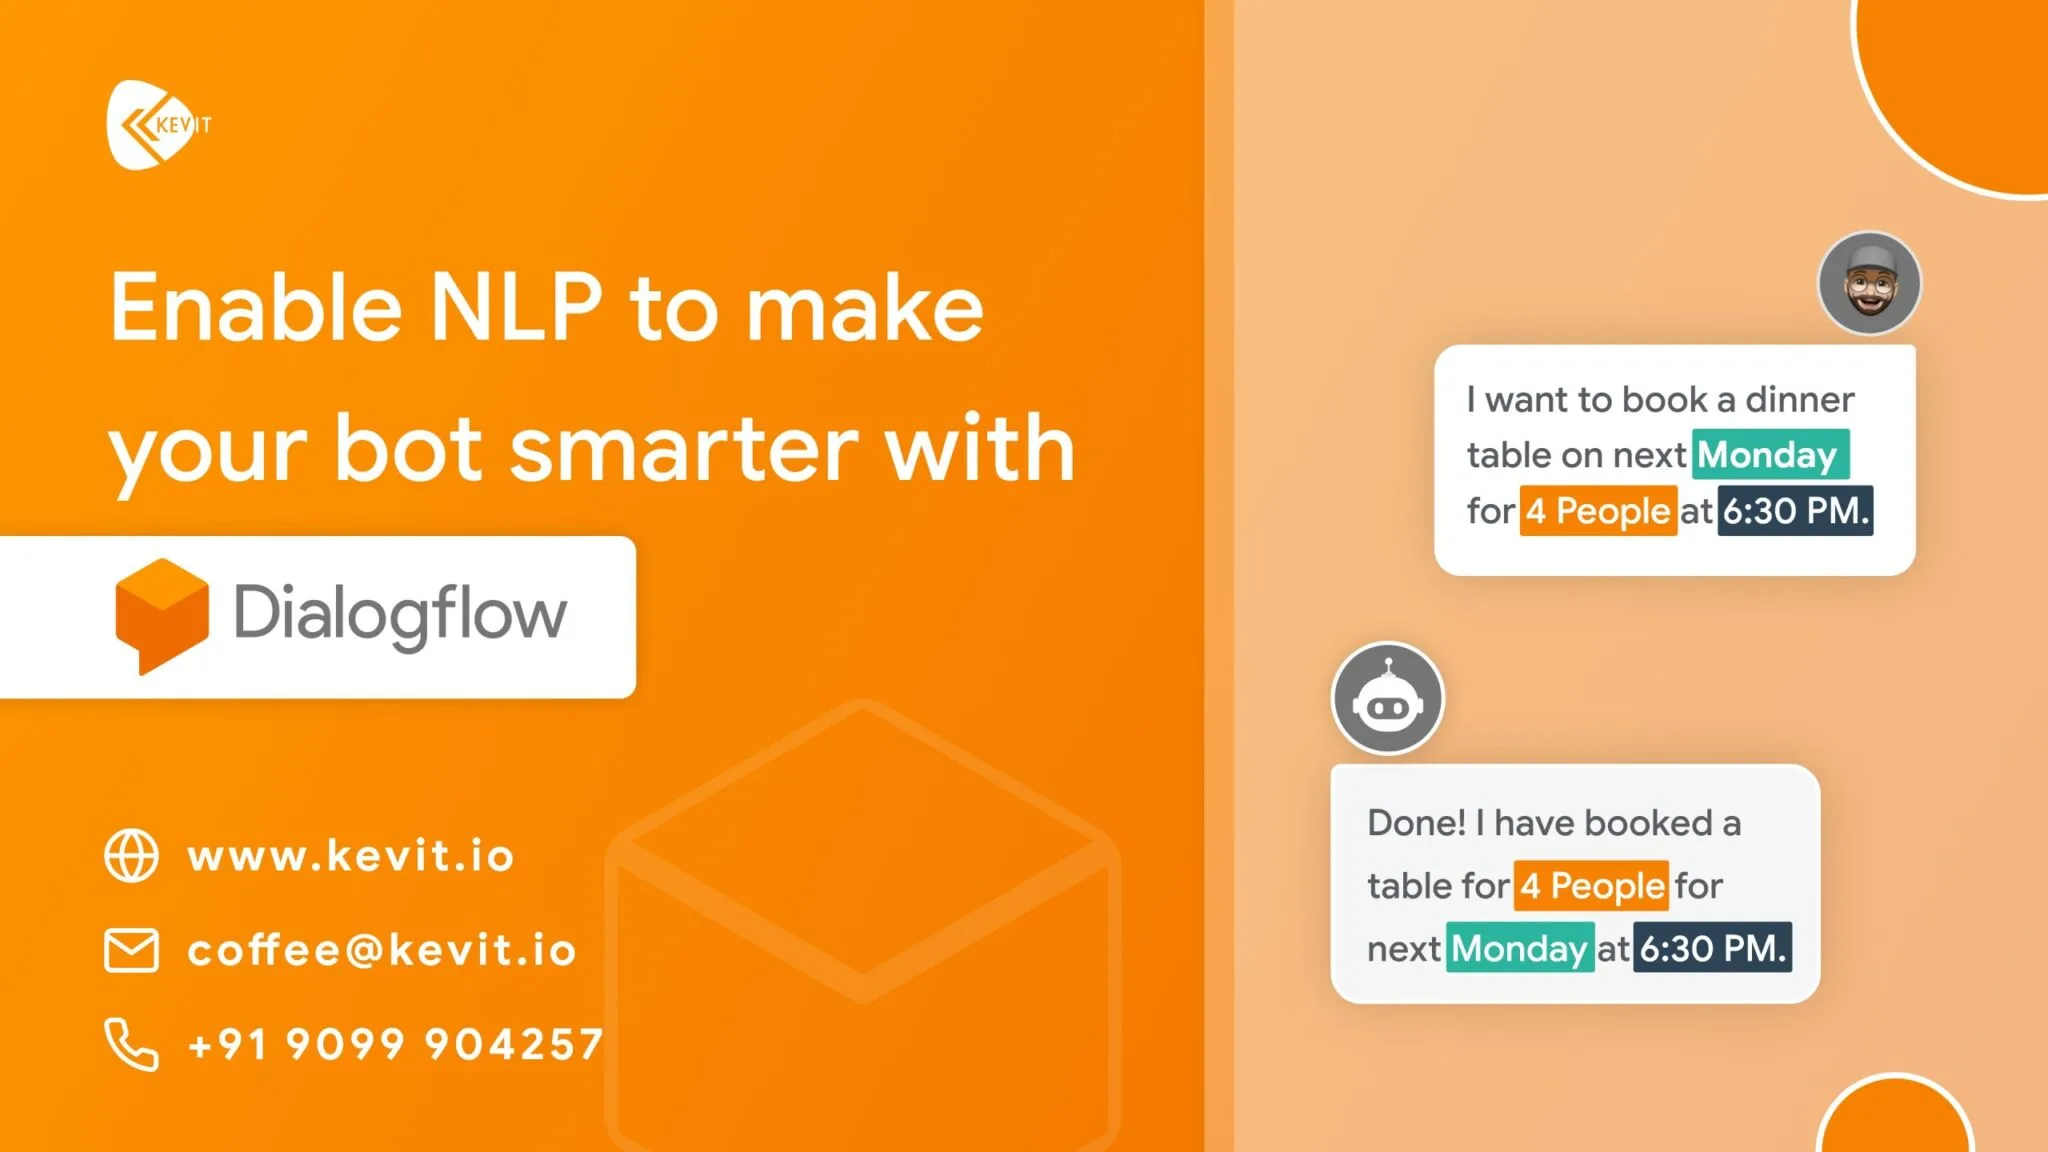 NLP with Dialogflow